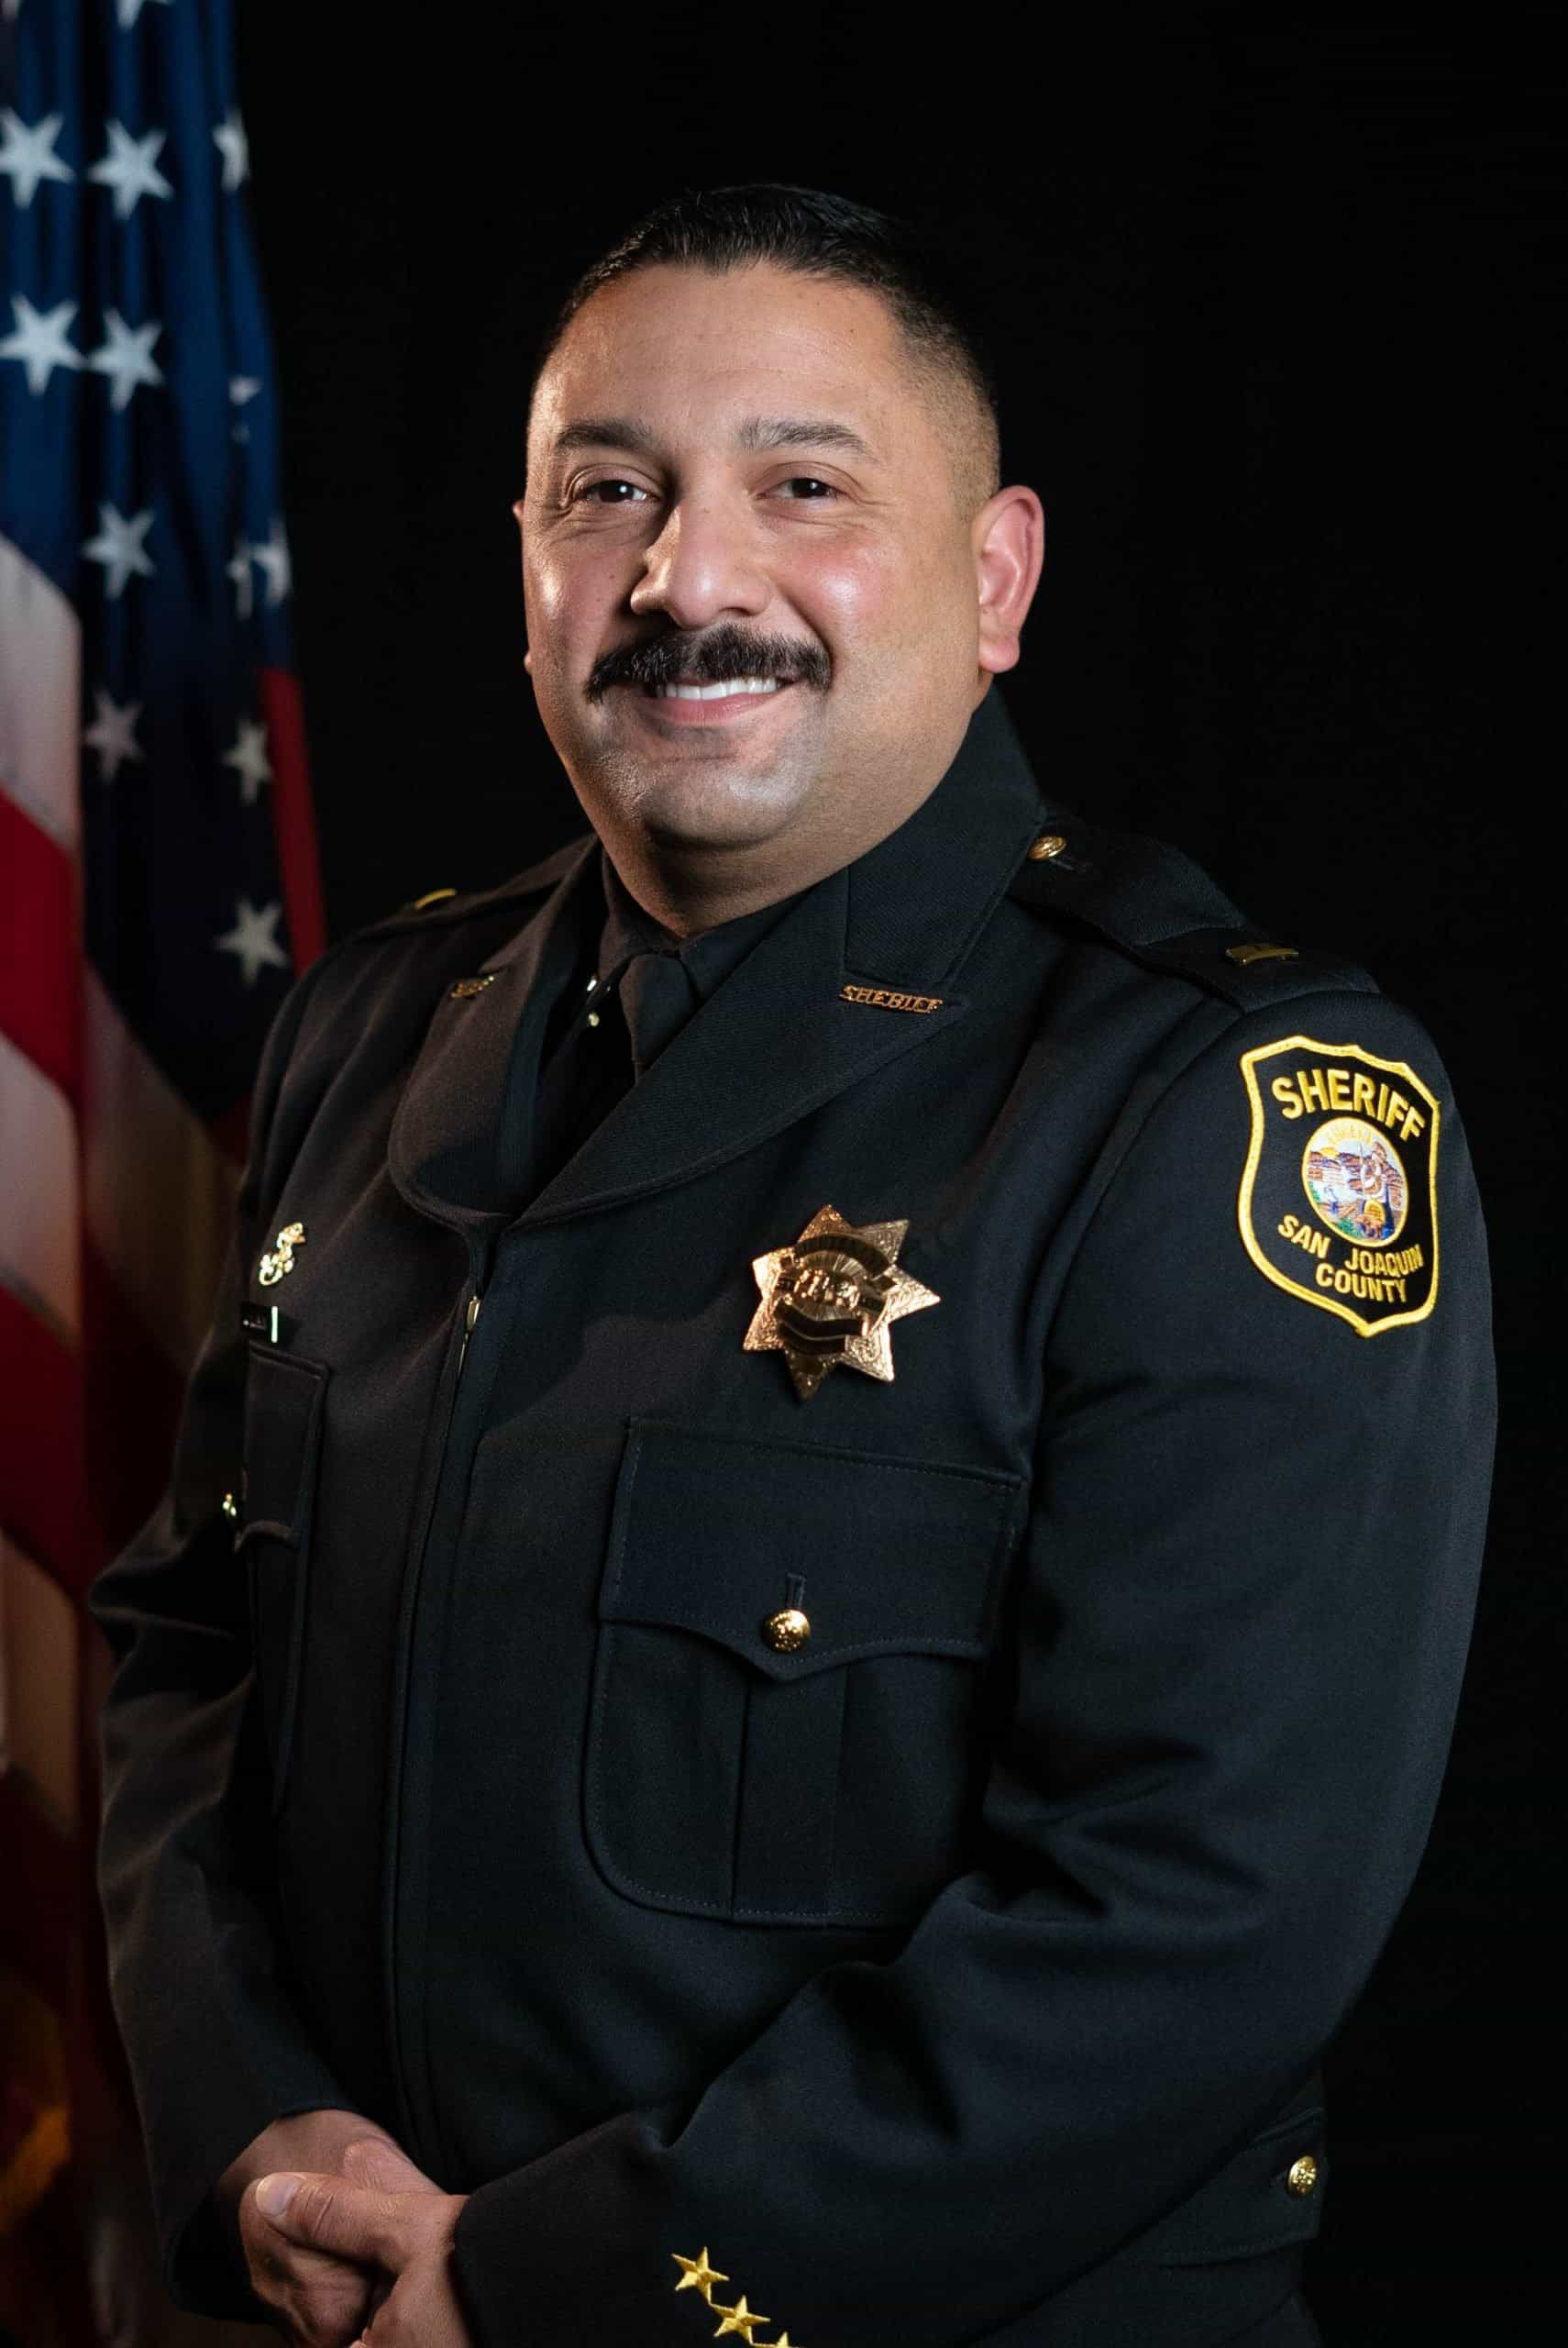 San Joaquin County Sheriff's Officer Jose Aleman